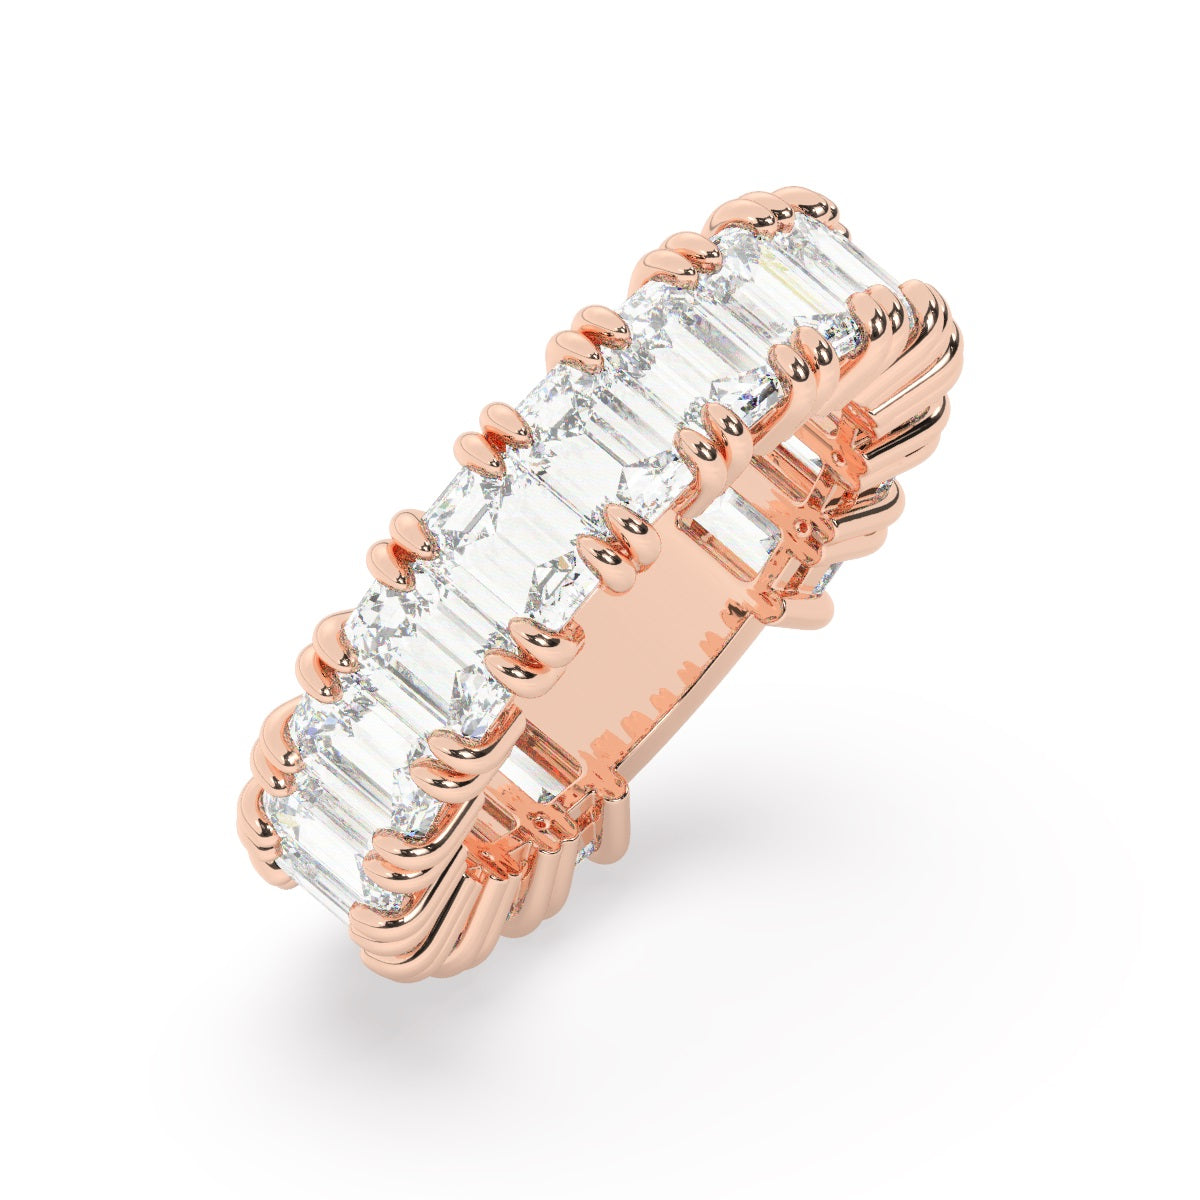 14k White Gold Diamond Emerald Cut Wedding Ring 7.75c